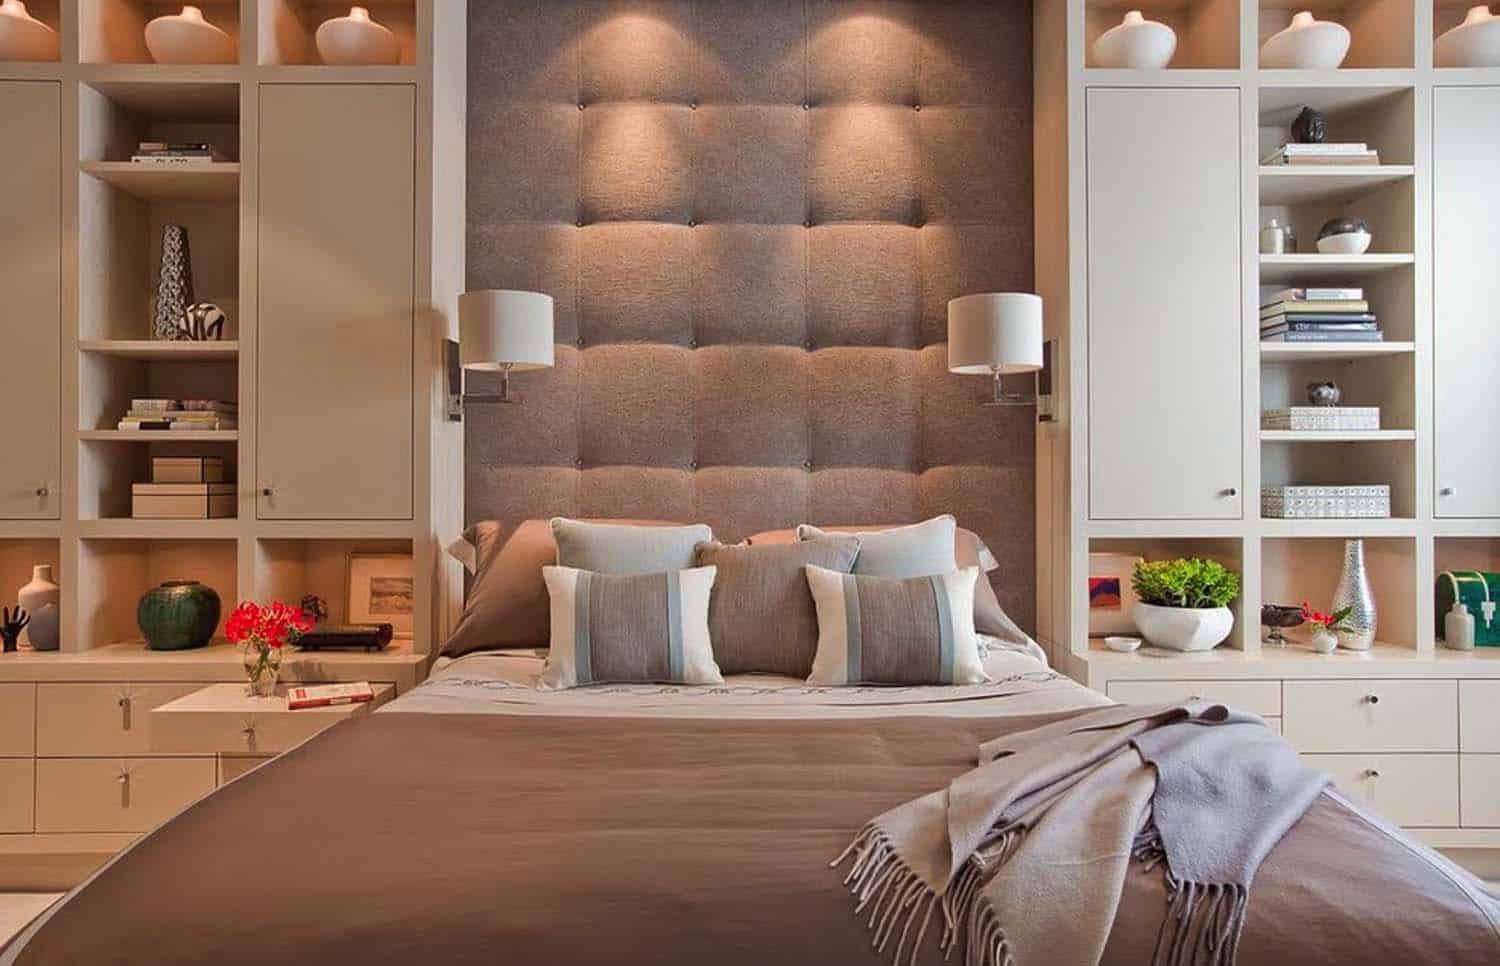 Stunning Master Bedroom Color Scheme Ideas